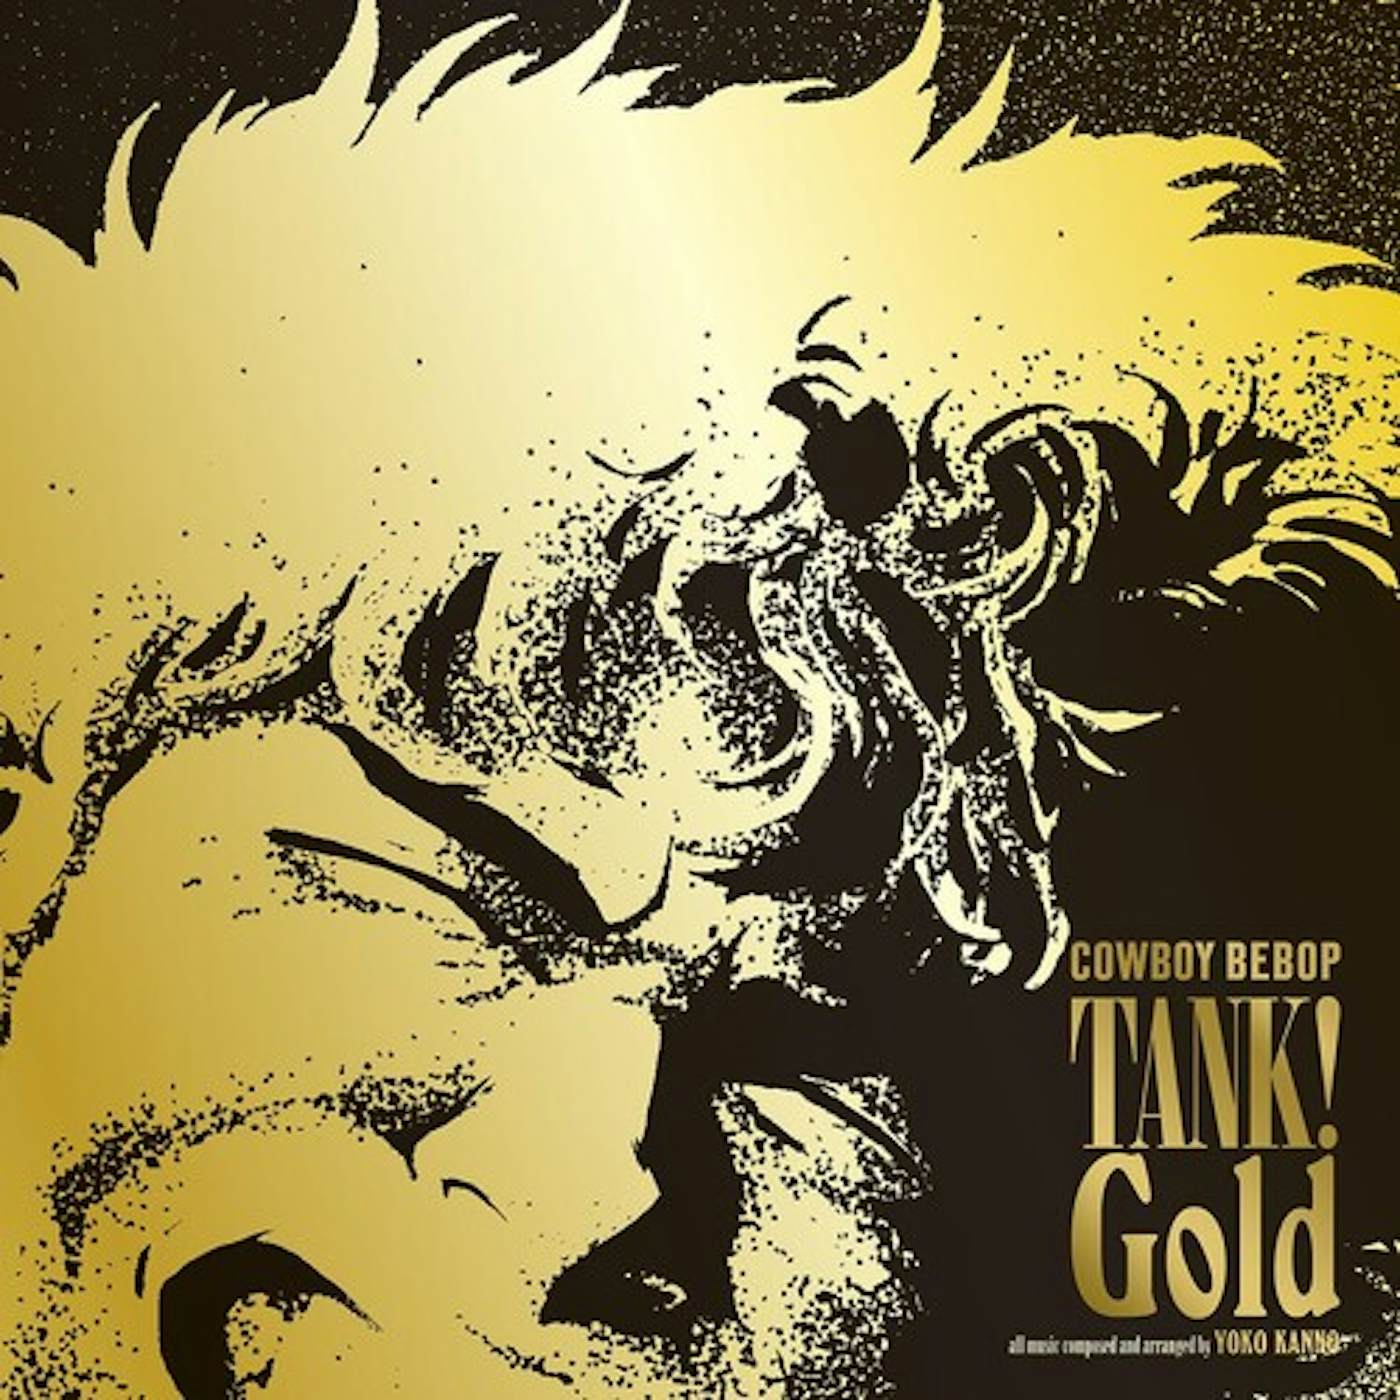 Yoko Kanno TANK GOLD COWBOY BEBOP - Original Soundtrack Vinyl Record